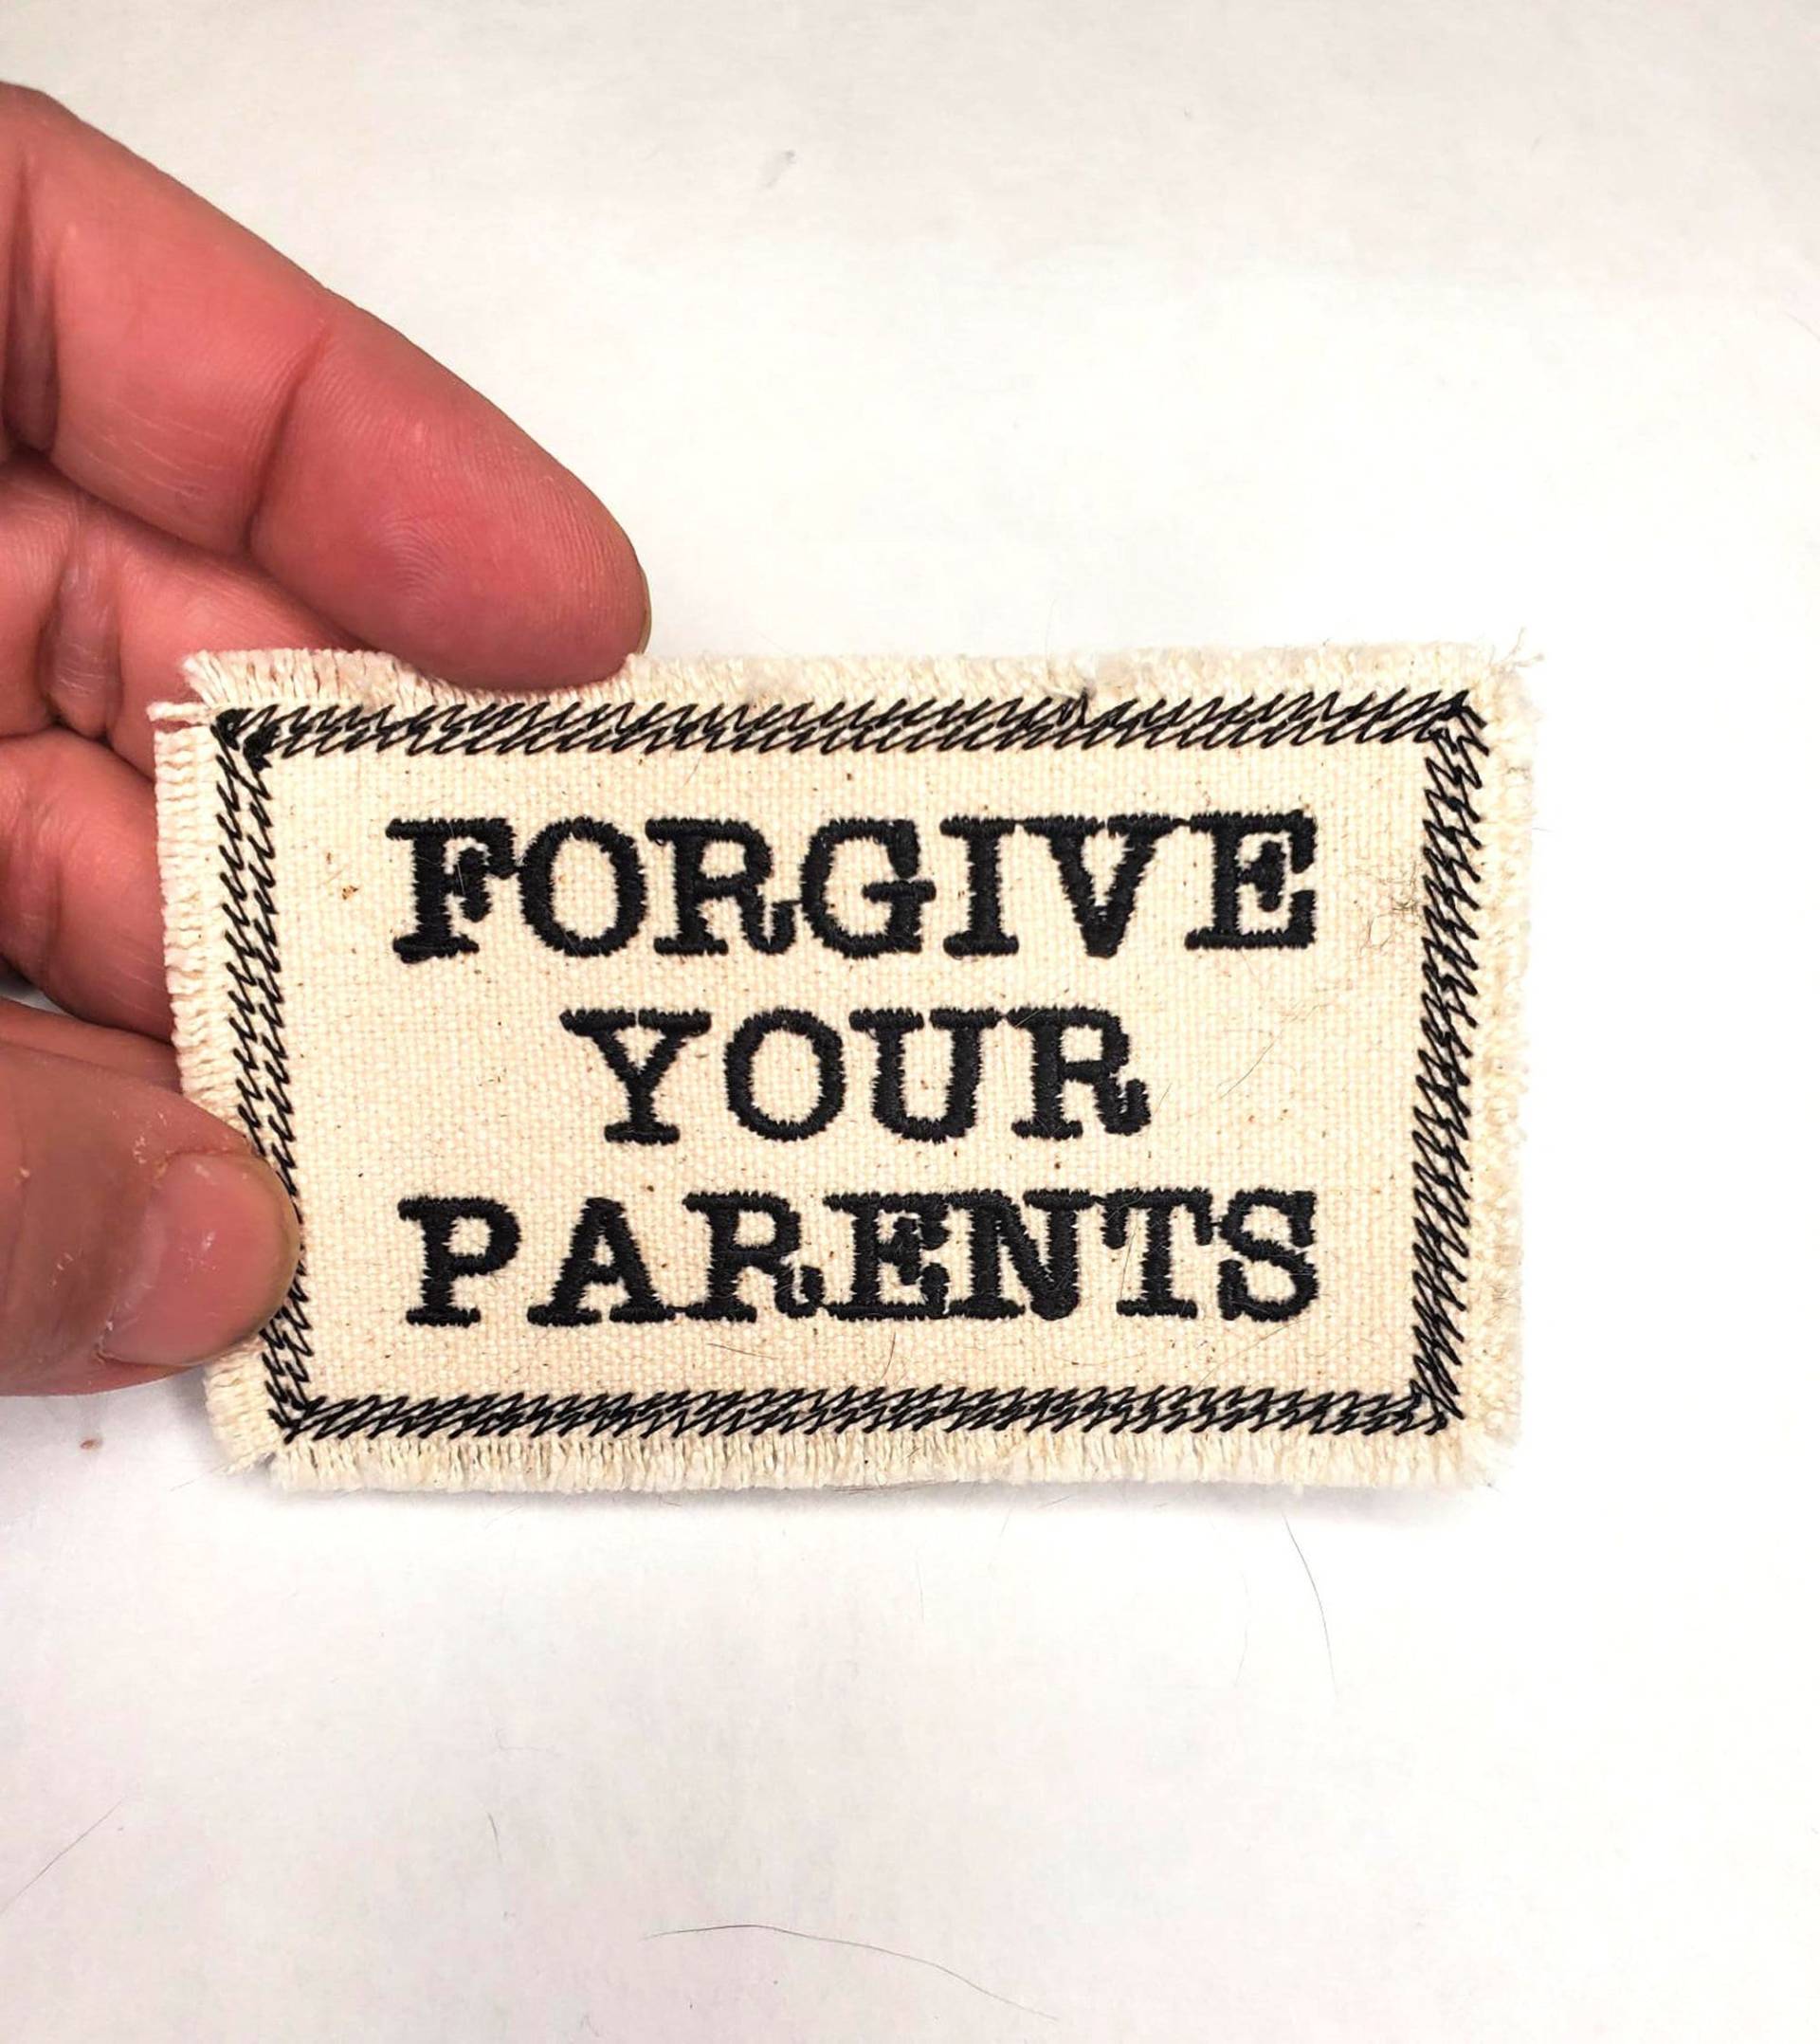 Forgive Your Parents - Words To Live By Bestickter Aufnäher Canvas Patch Make A Statement von StitchitizedPatches